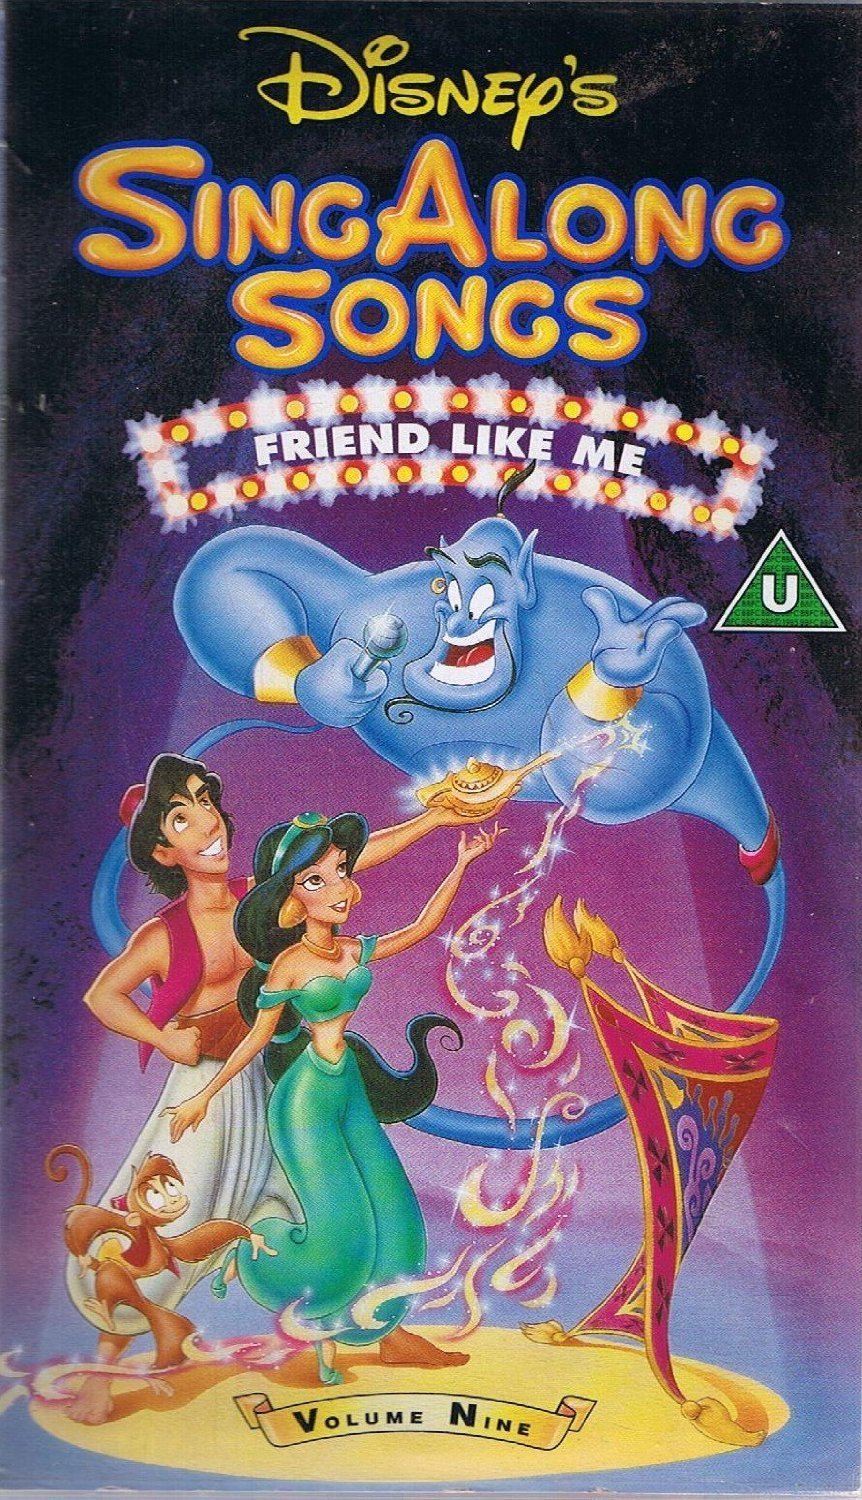 Disney's Sing-Along Songs: Friend Like Me reviews (1994) .